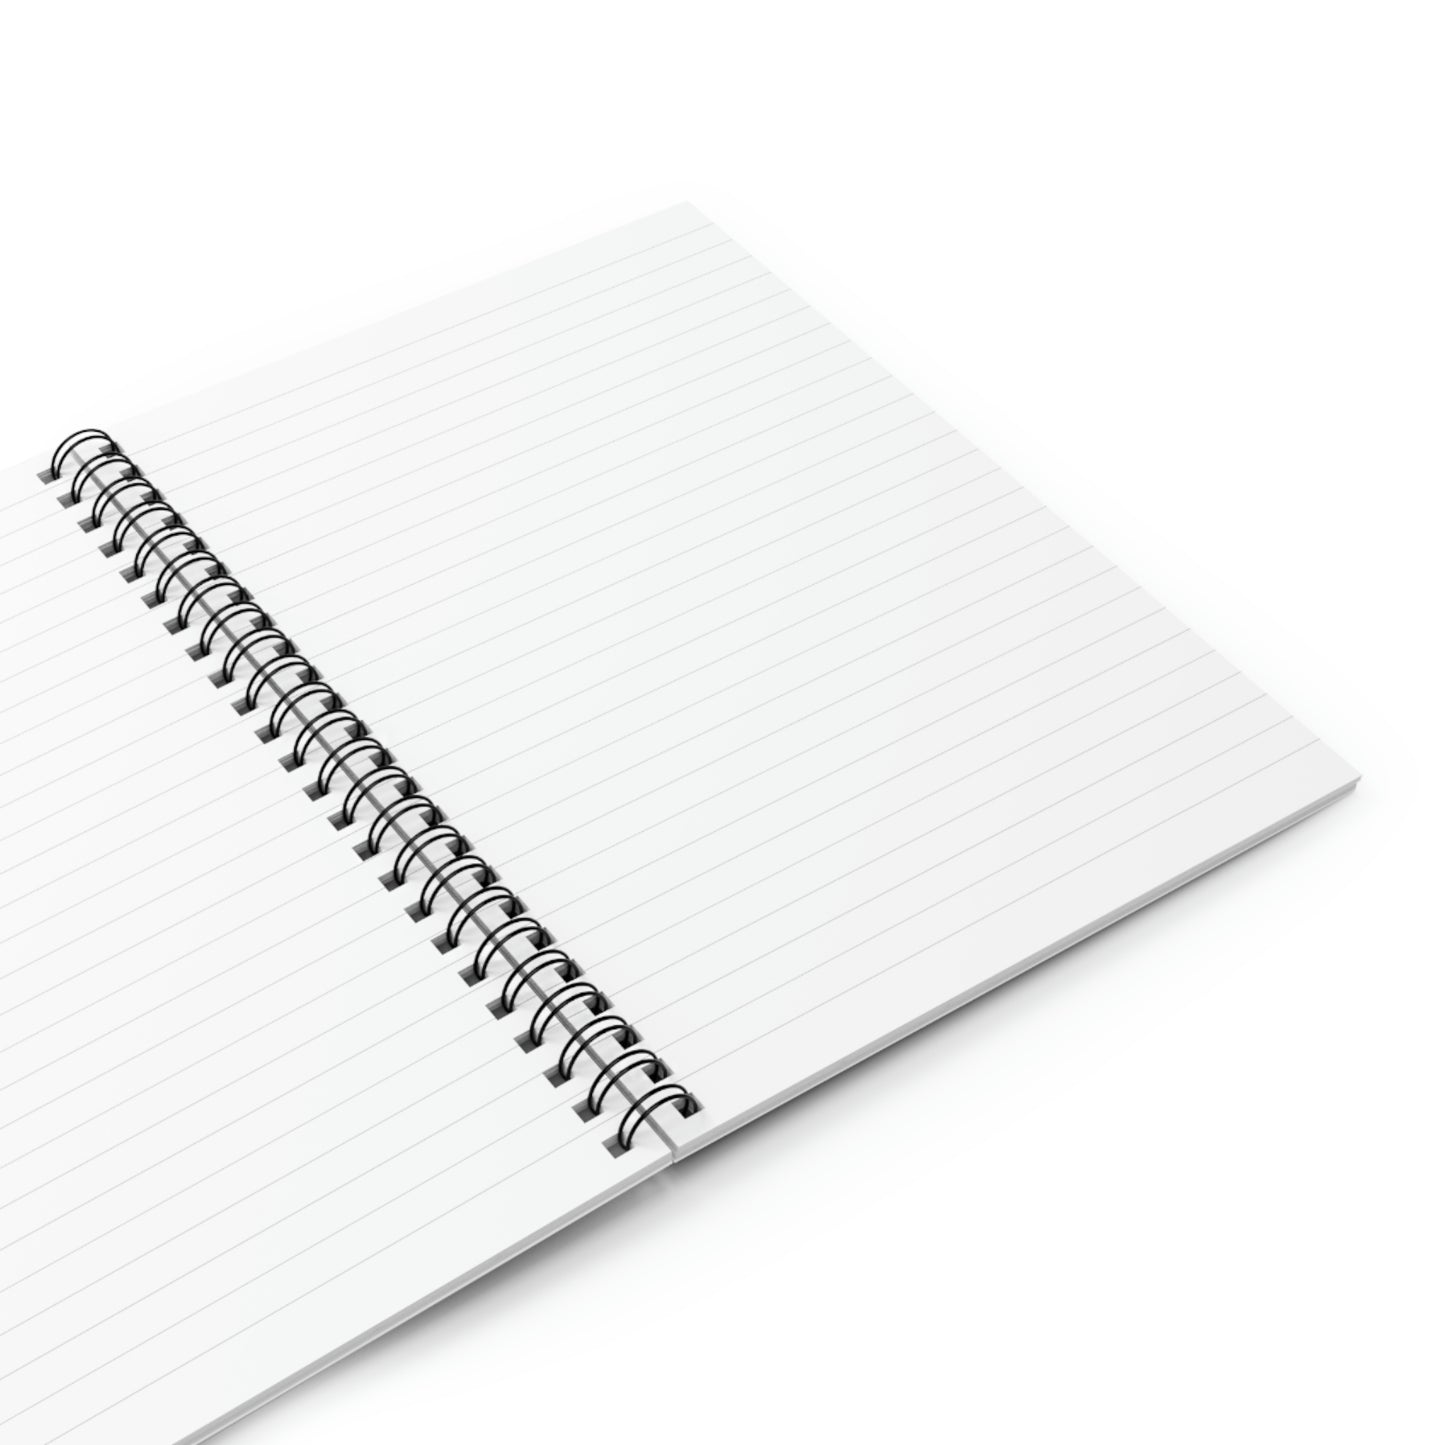 Covered 2 Spiral Notebook/Journal